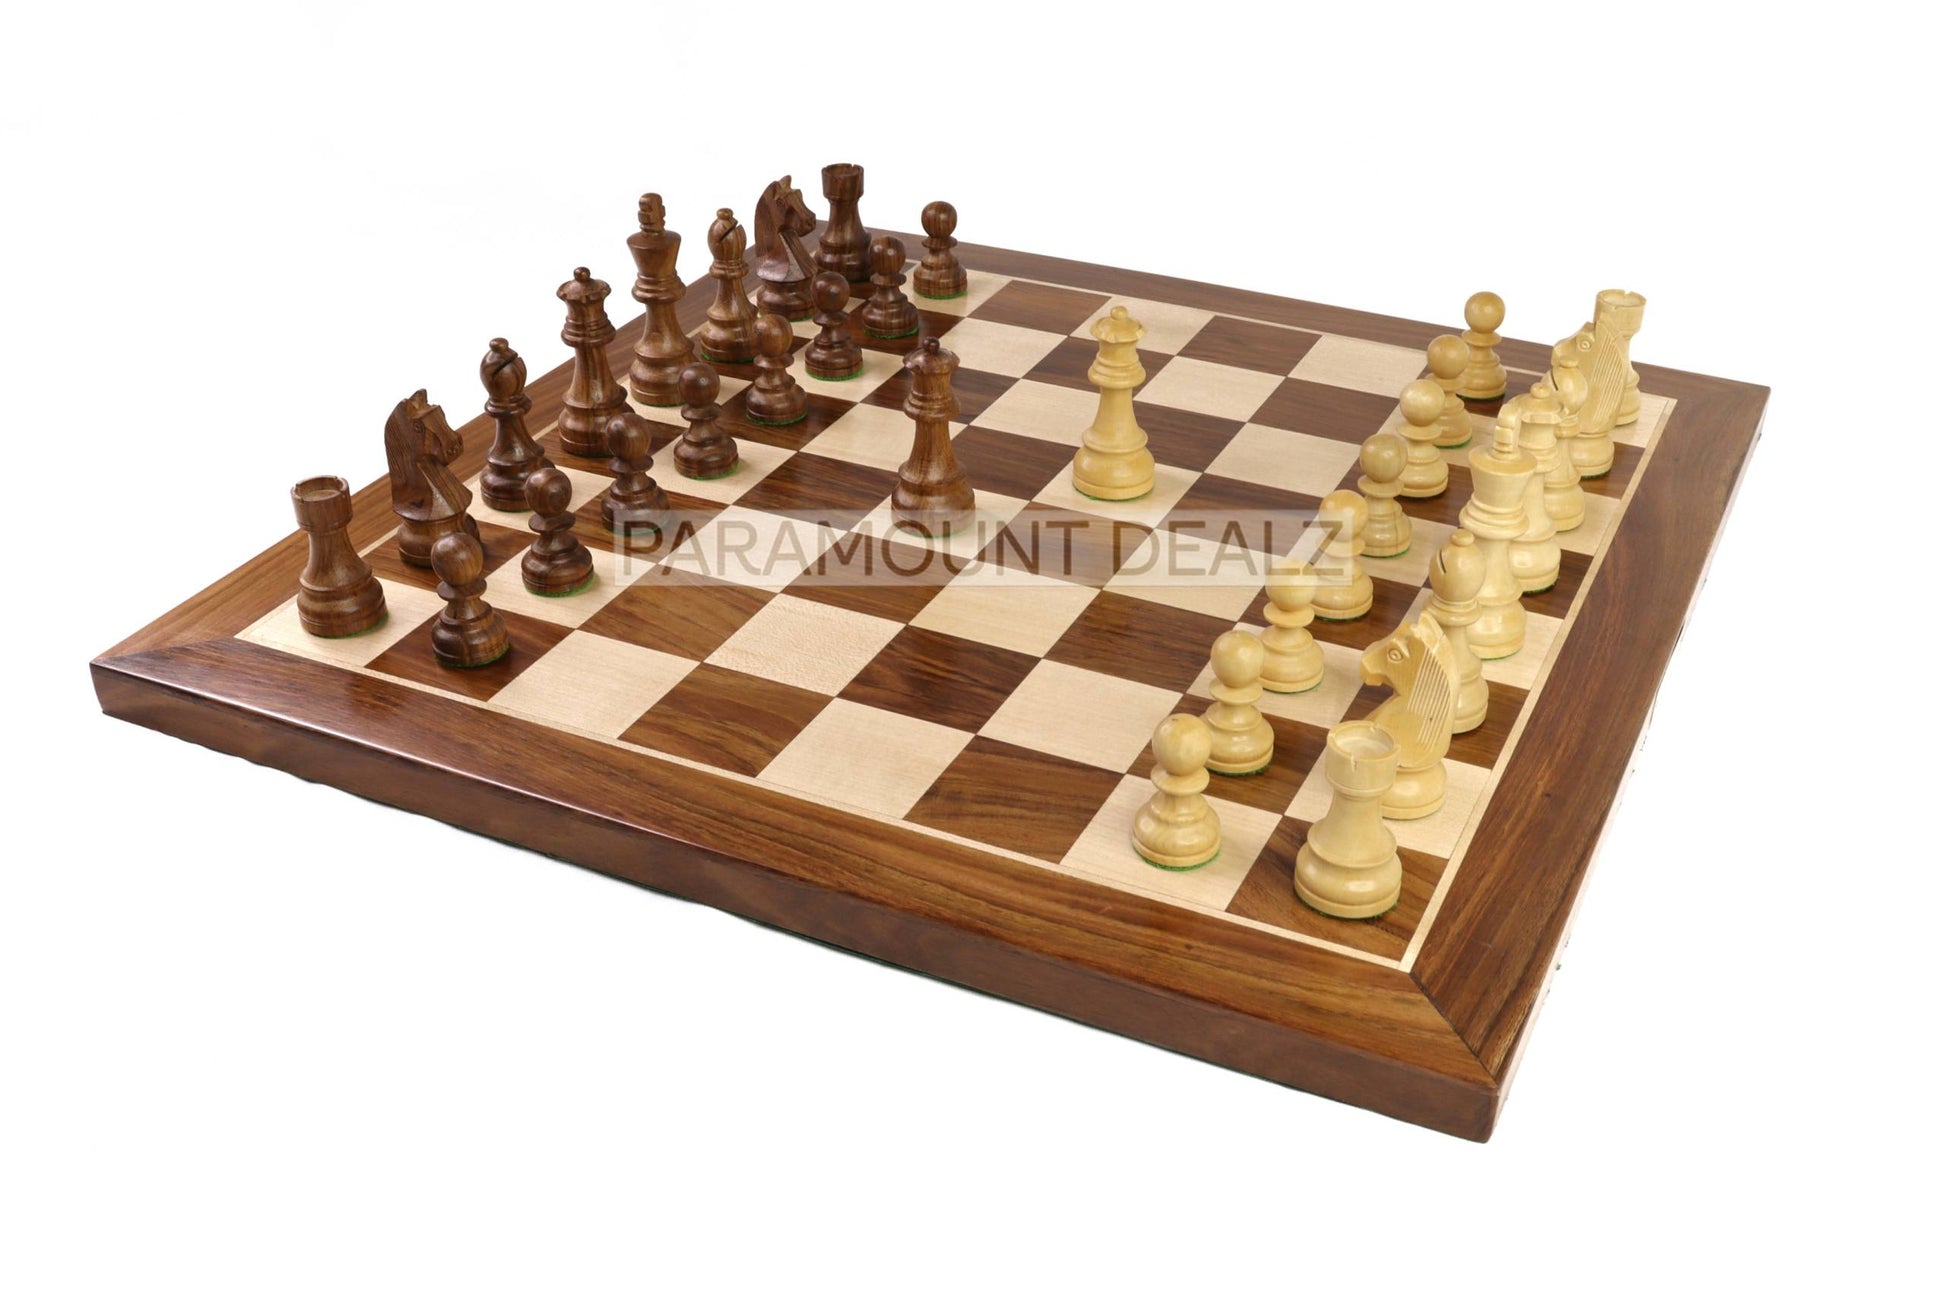 Grand Master Square Cornered Edition 21 inches Wooden chess board